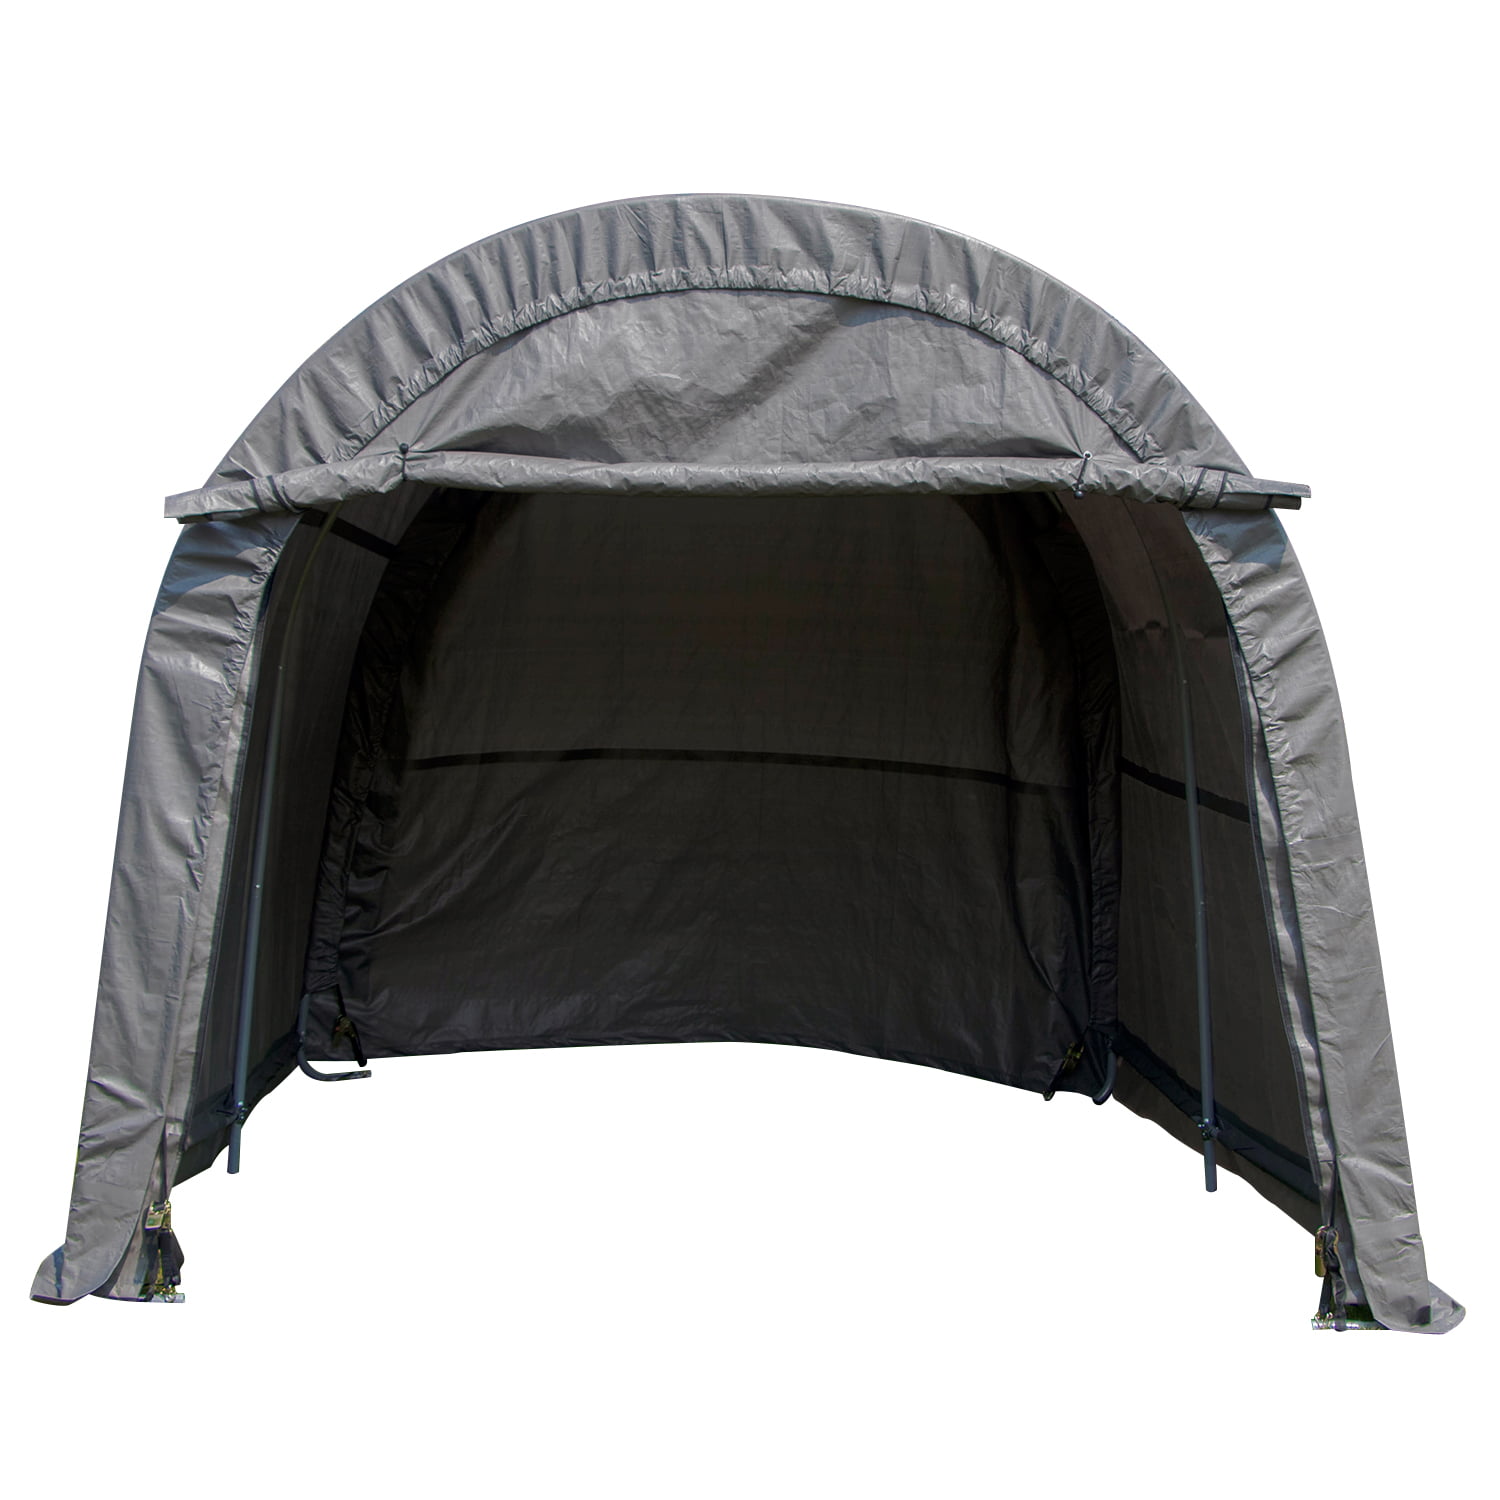 10'x10'x8'FT Storage Shed Logic Shelter Car Garage Steel Carport Canopy Tent 